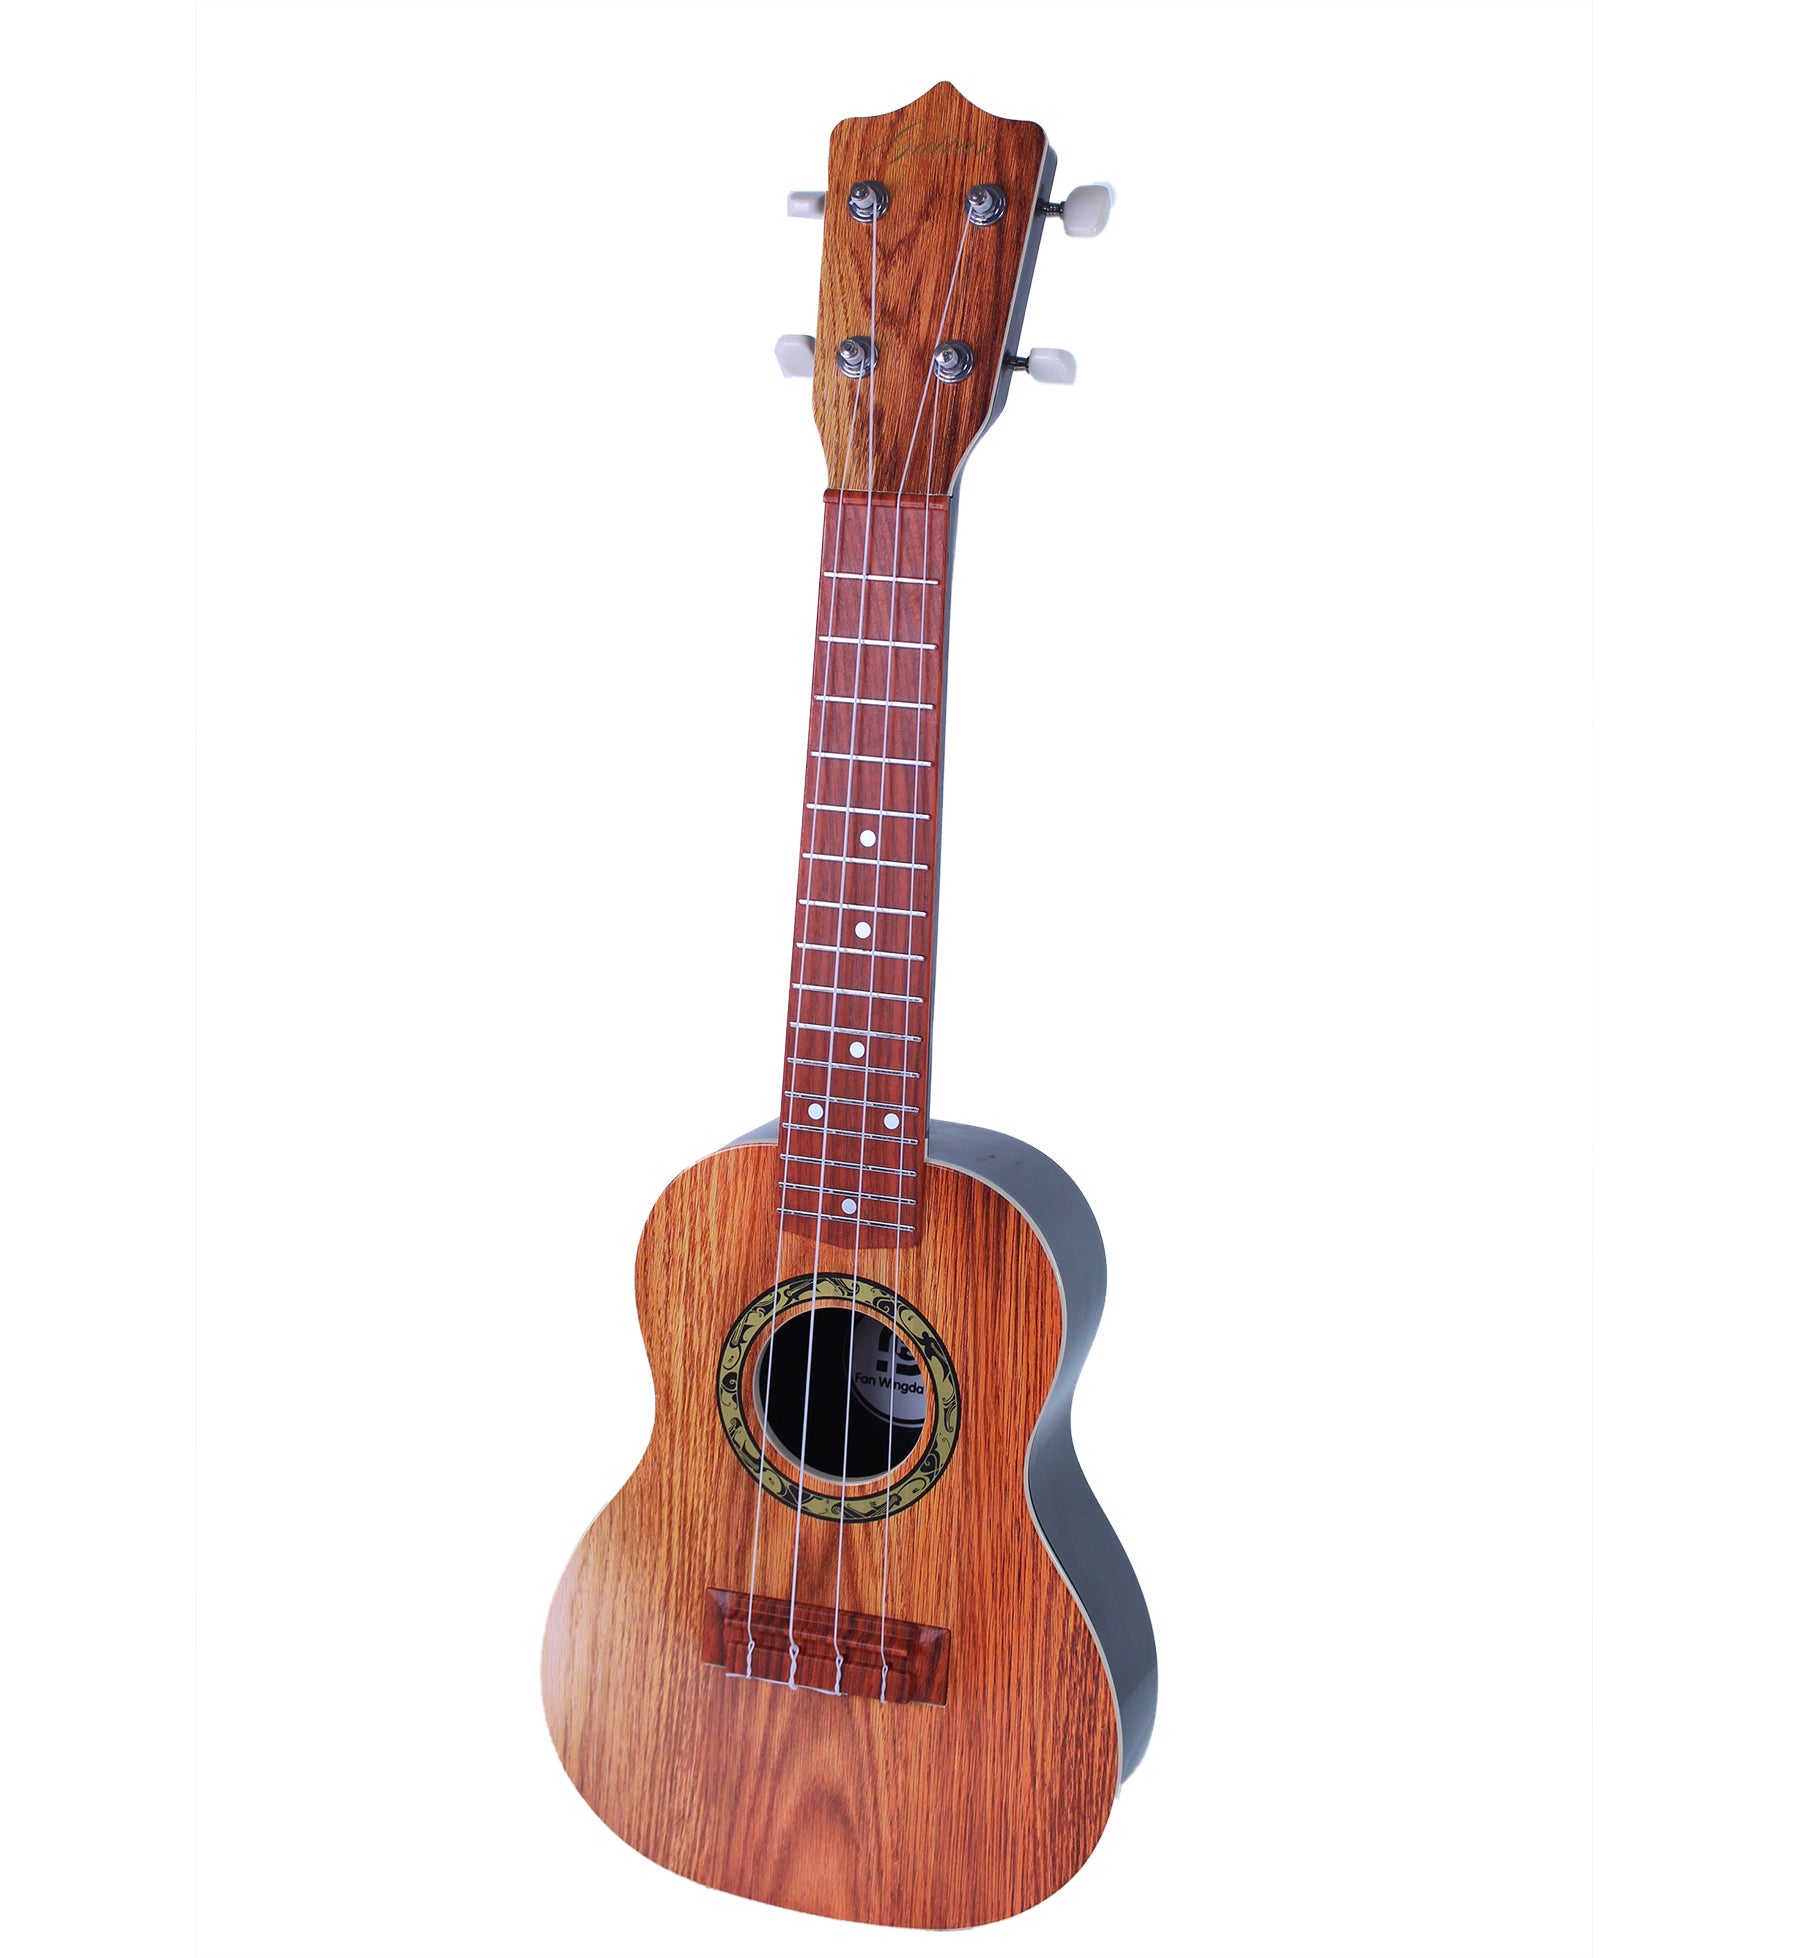 Detske ukulele /kytara 58 cm | Czech Toys | czechmovie